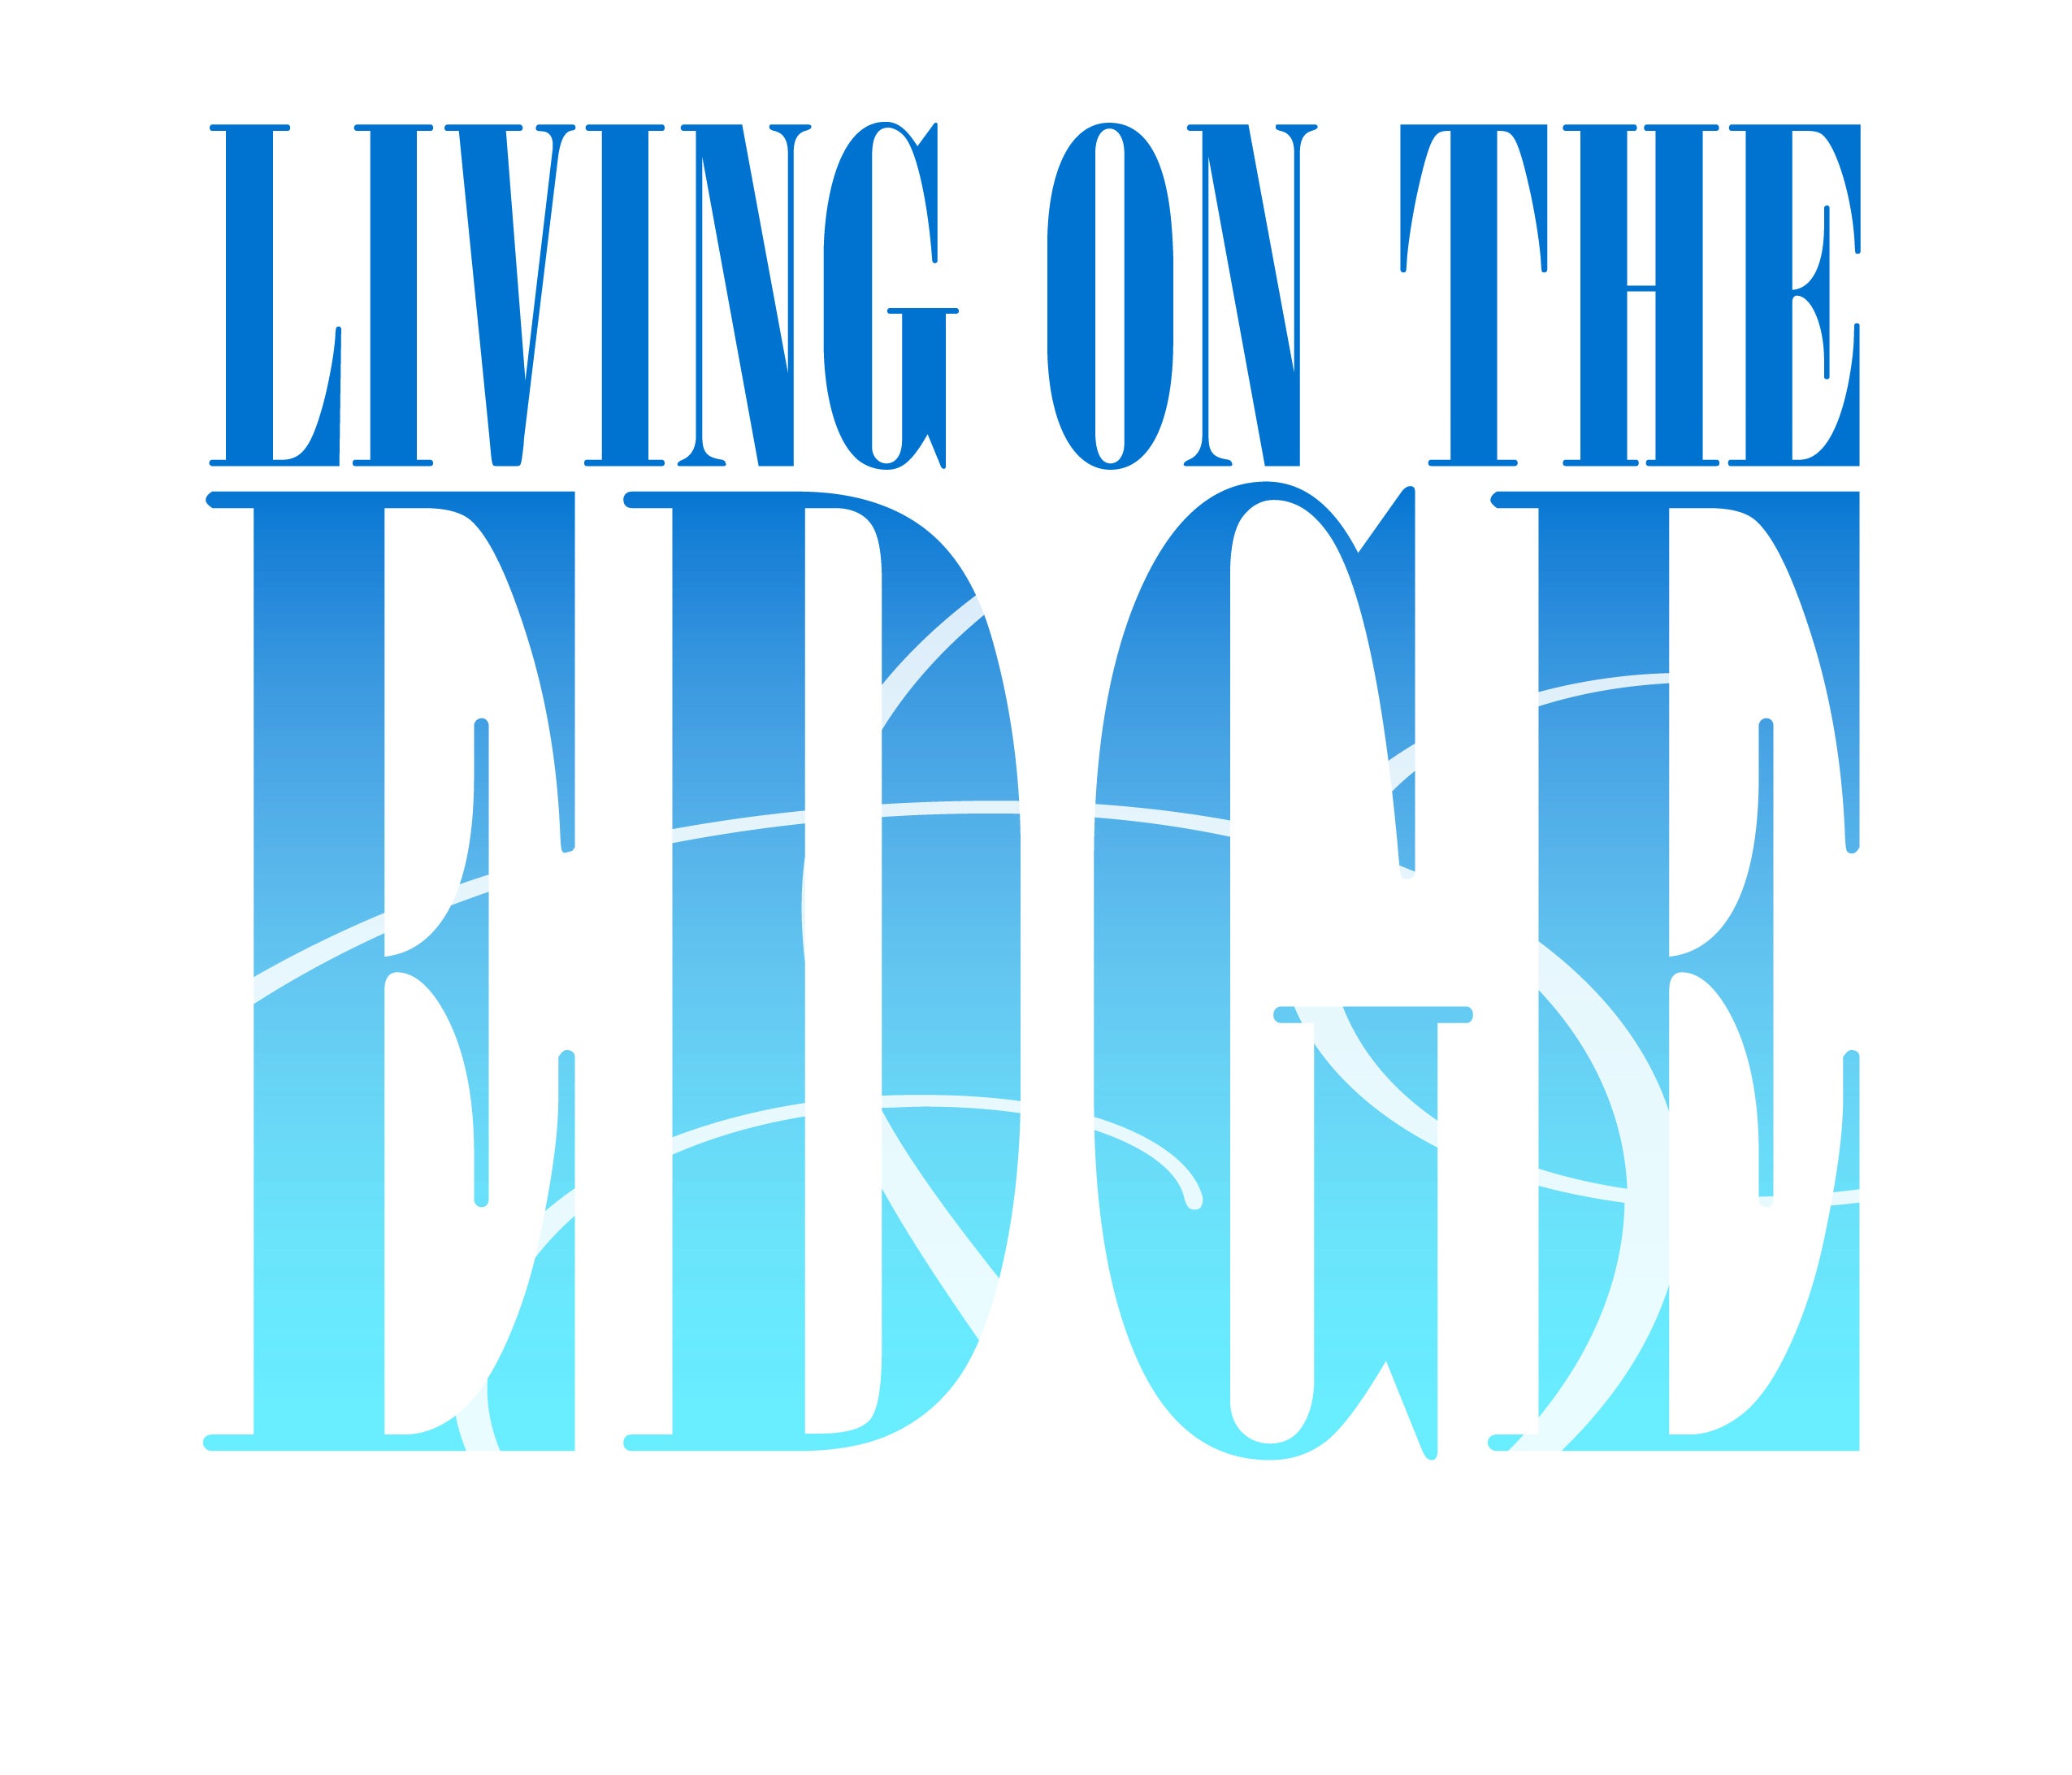 LivingontheEdge_logo_cmyk (3)1.jpg